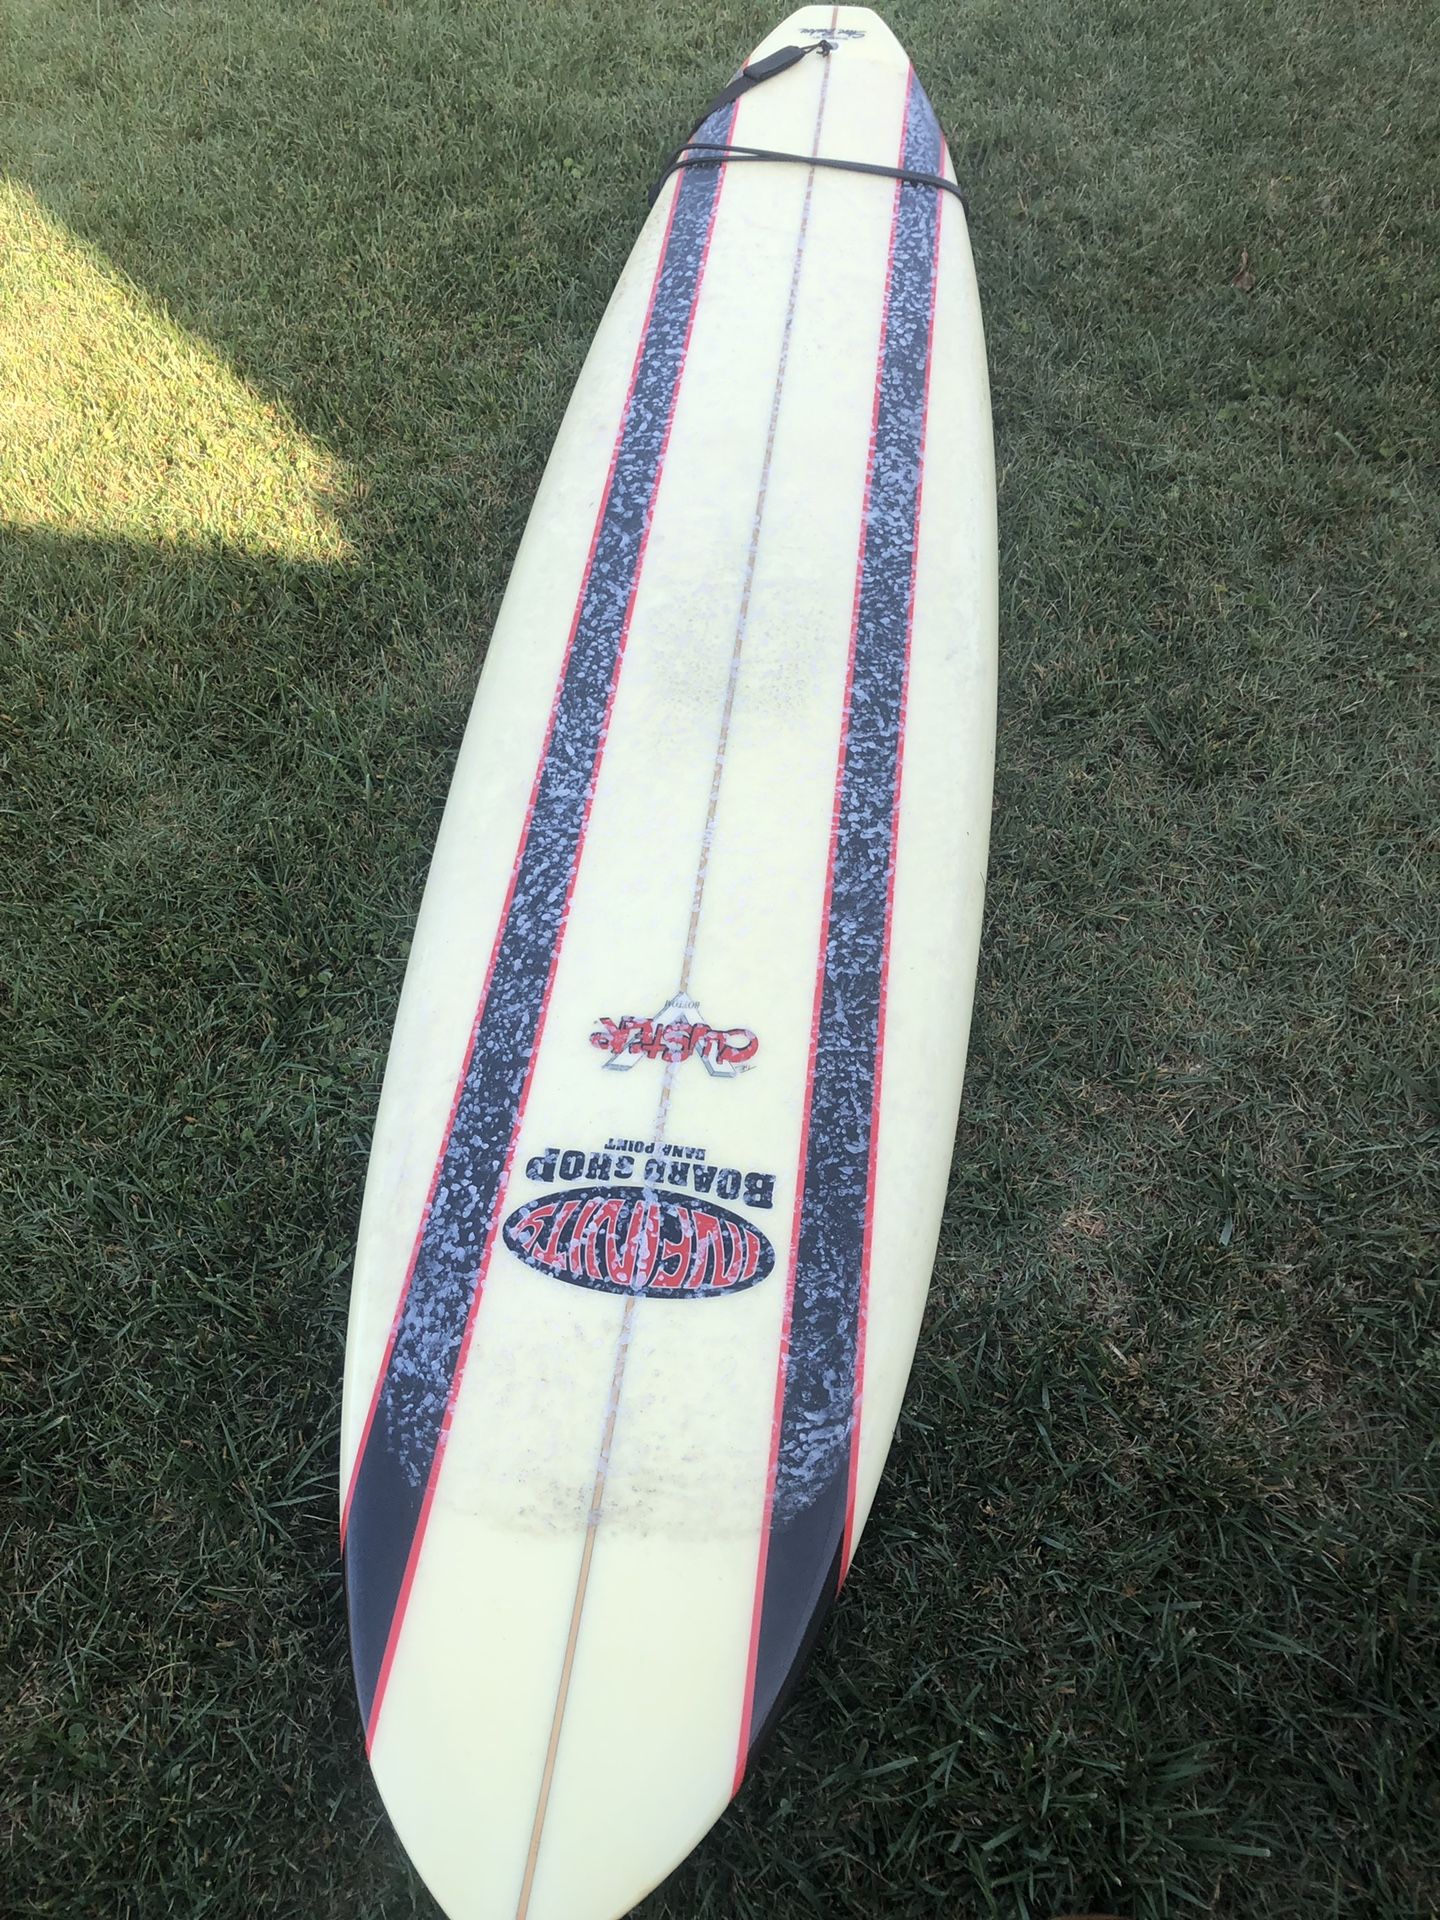 Infinity surfboard